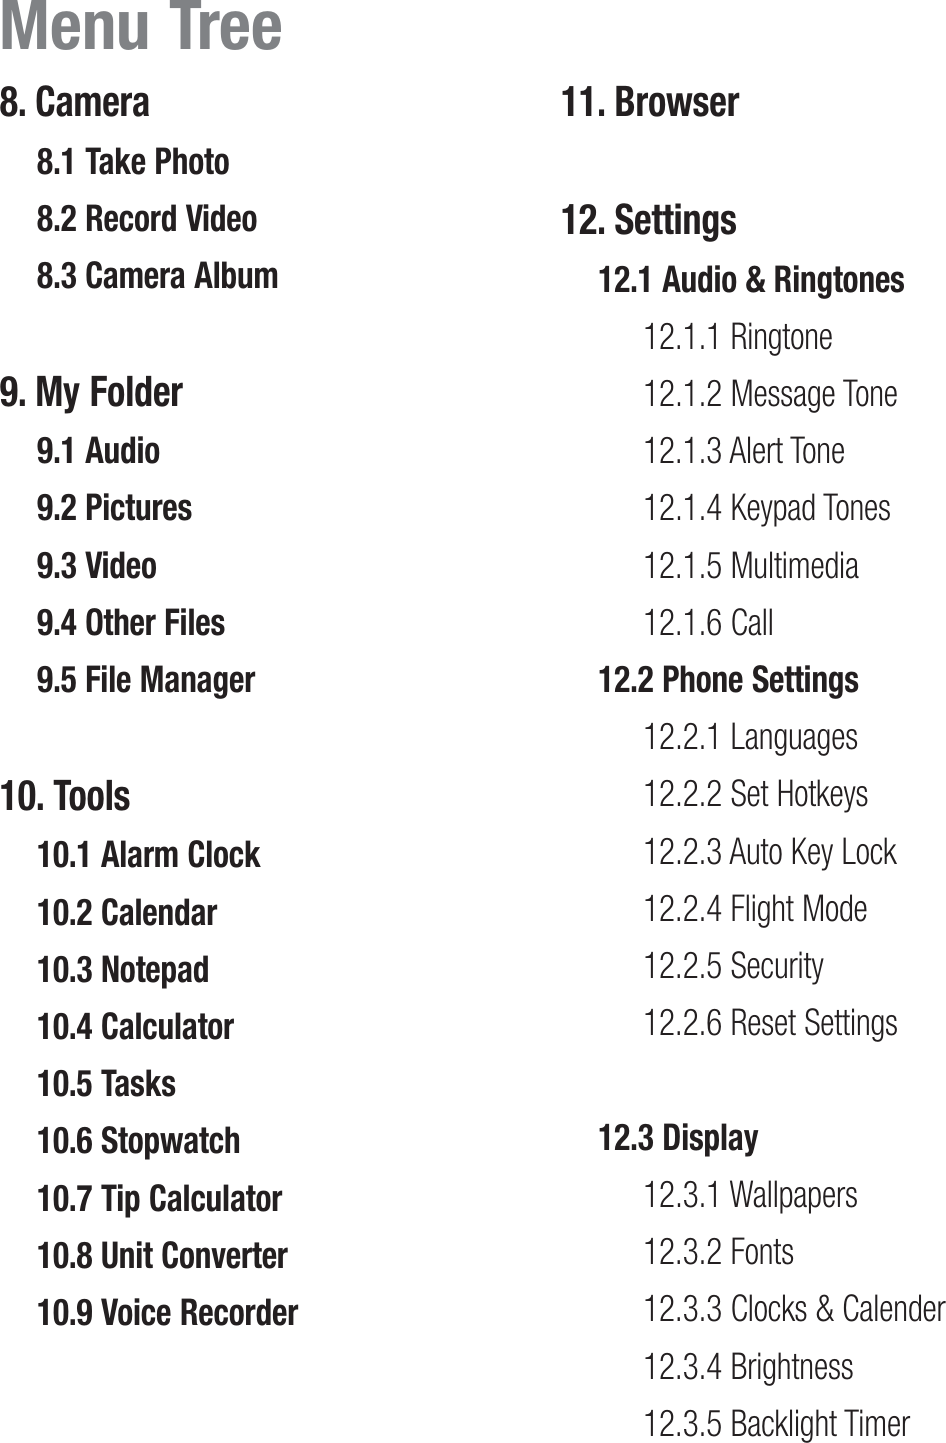 8. Camera 8.1 Take Photo8.2 Record Video8.3 Camera Album9. My Folder 9.1 Audio9.2 Pictures9.3 Video9.4 Other Files9.5 File Manager10. Tools 10.1 Alarm Clock10.2 Calendar10.3 Notepad10.4 Calculator10.5 Tasks10.6 Stopwatch10.7 Tip Calculator10.8 Unit Converter10.9 Voice Recorder11. Browser 12. Settings12.1 Audio &amp; Ringtones12.1.1 Ringtone12.1.2 Message Tone12.1.3 Alert Tone12.1.4 Keypad Tones12.1.5 Multimedia12.1.6 Call12.2 Phone Settings12.2.1 Languages12.2.2 Set Hotkeys12.2.3 Auto Key Lock12.2.4 Flight Mode12.2.5 Security12.2.6 Reset Settings12.3 Display12.3.1 Wallpapers12.3.2 Fonts12.3.3 Clocks &amp; Calender12.3.4 Brightness12.3.5 Backlight TimerMenu Tree